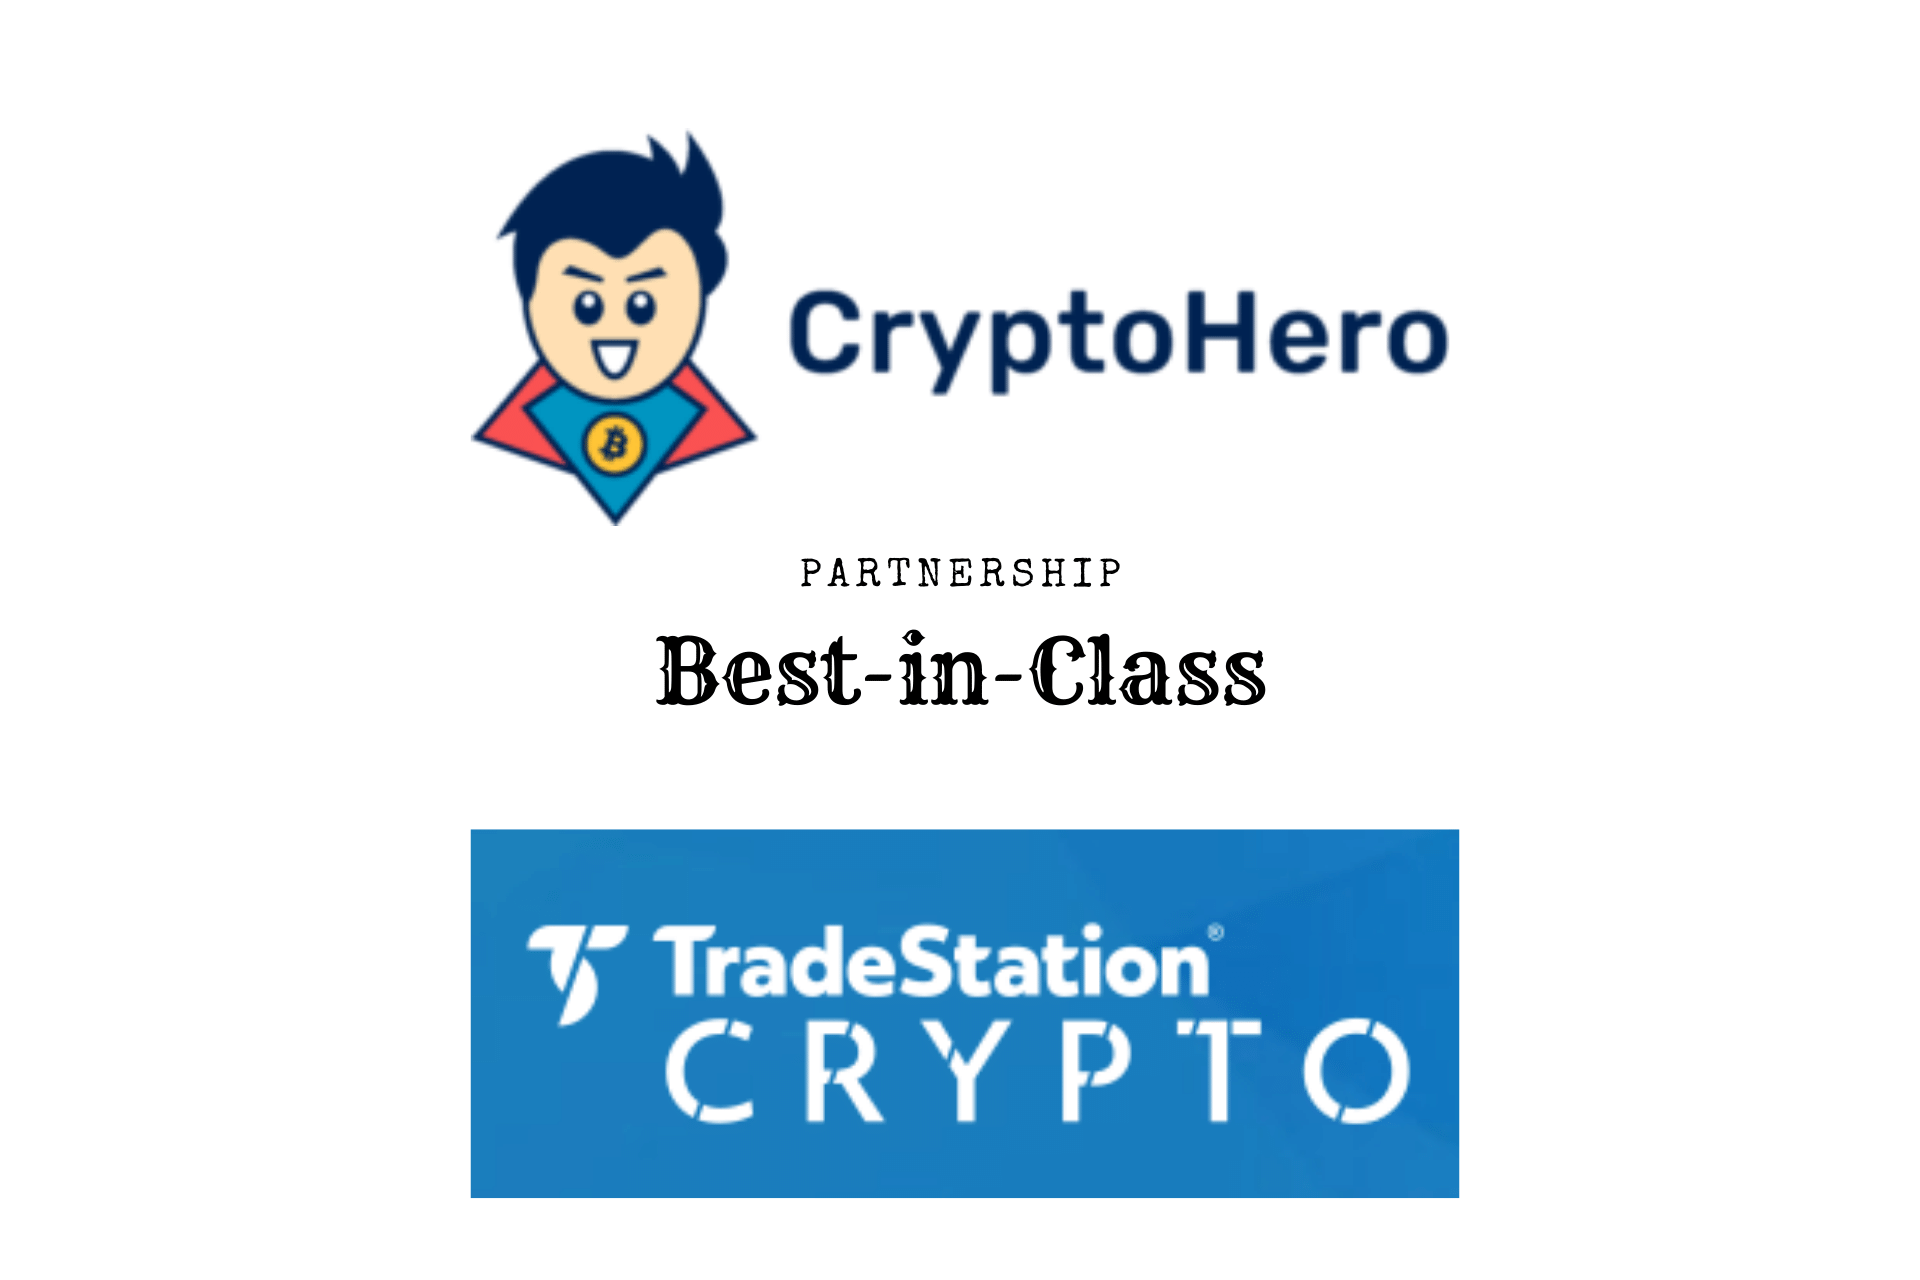 Tradestation CryptoHero Partnership